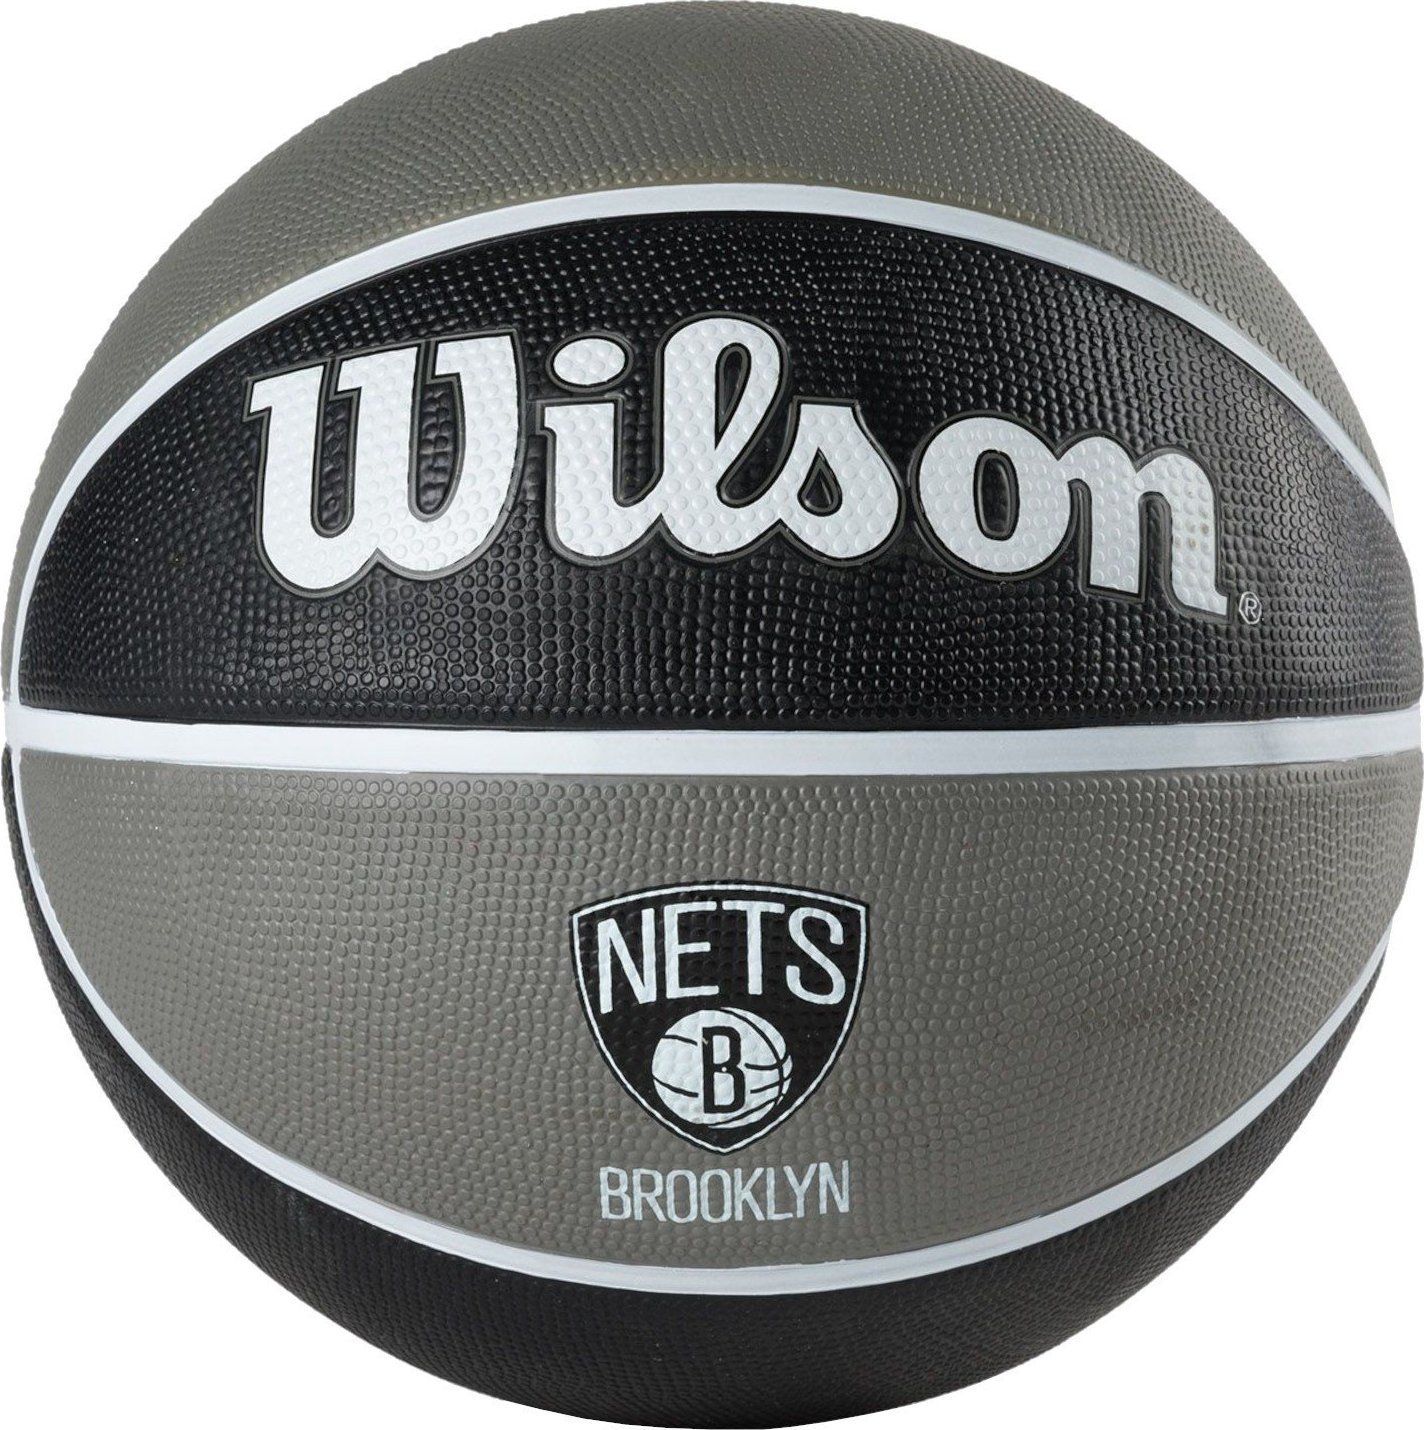 Minge baschet Wilson NBA TEAM Tribut Brooklyn Nets, marime 7